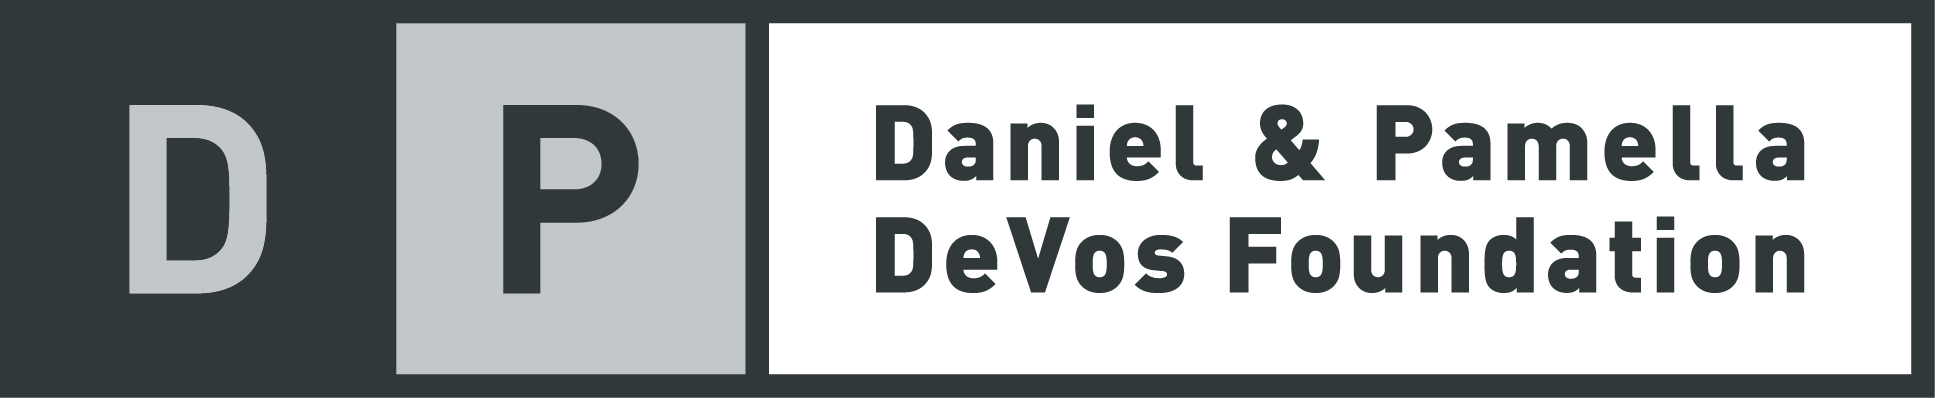 Daniel and Pamella DeVos Foundation logo